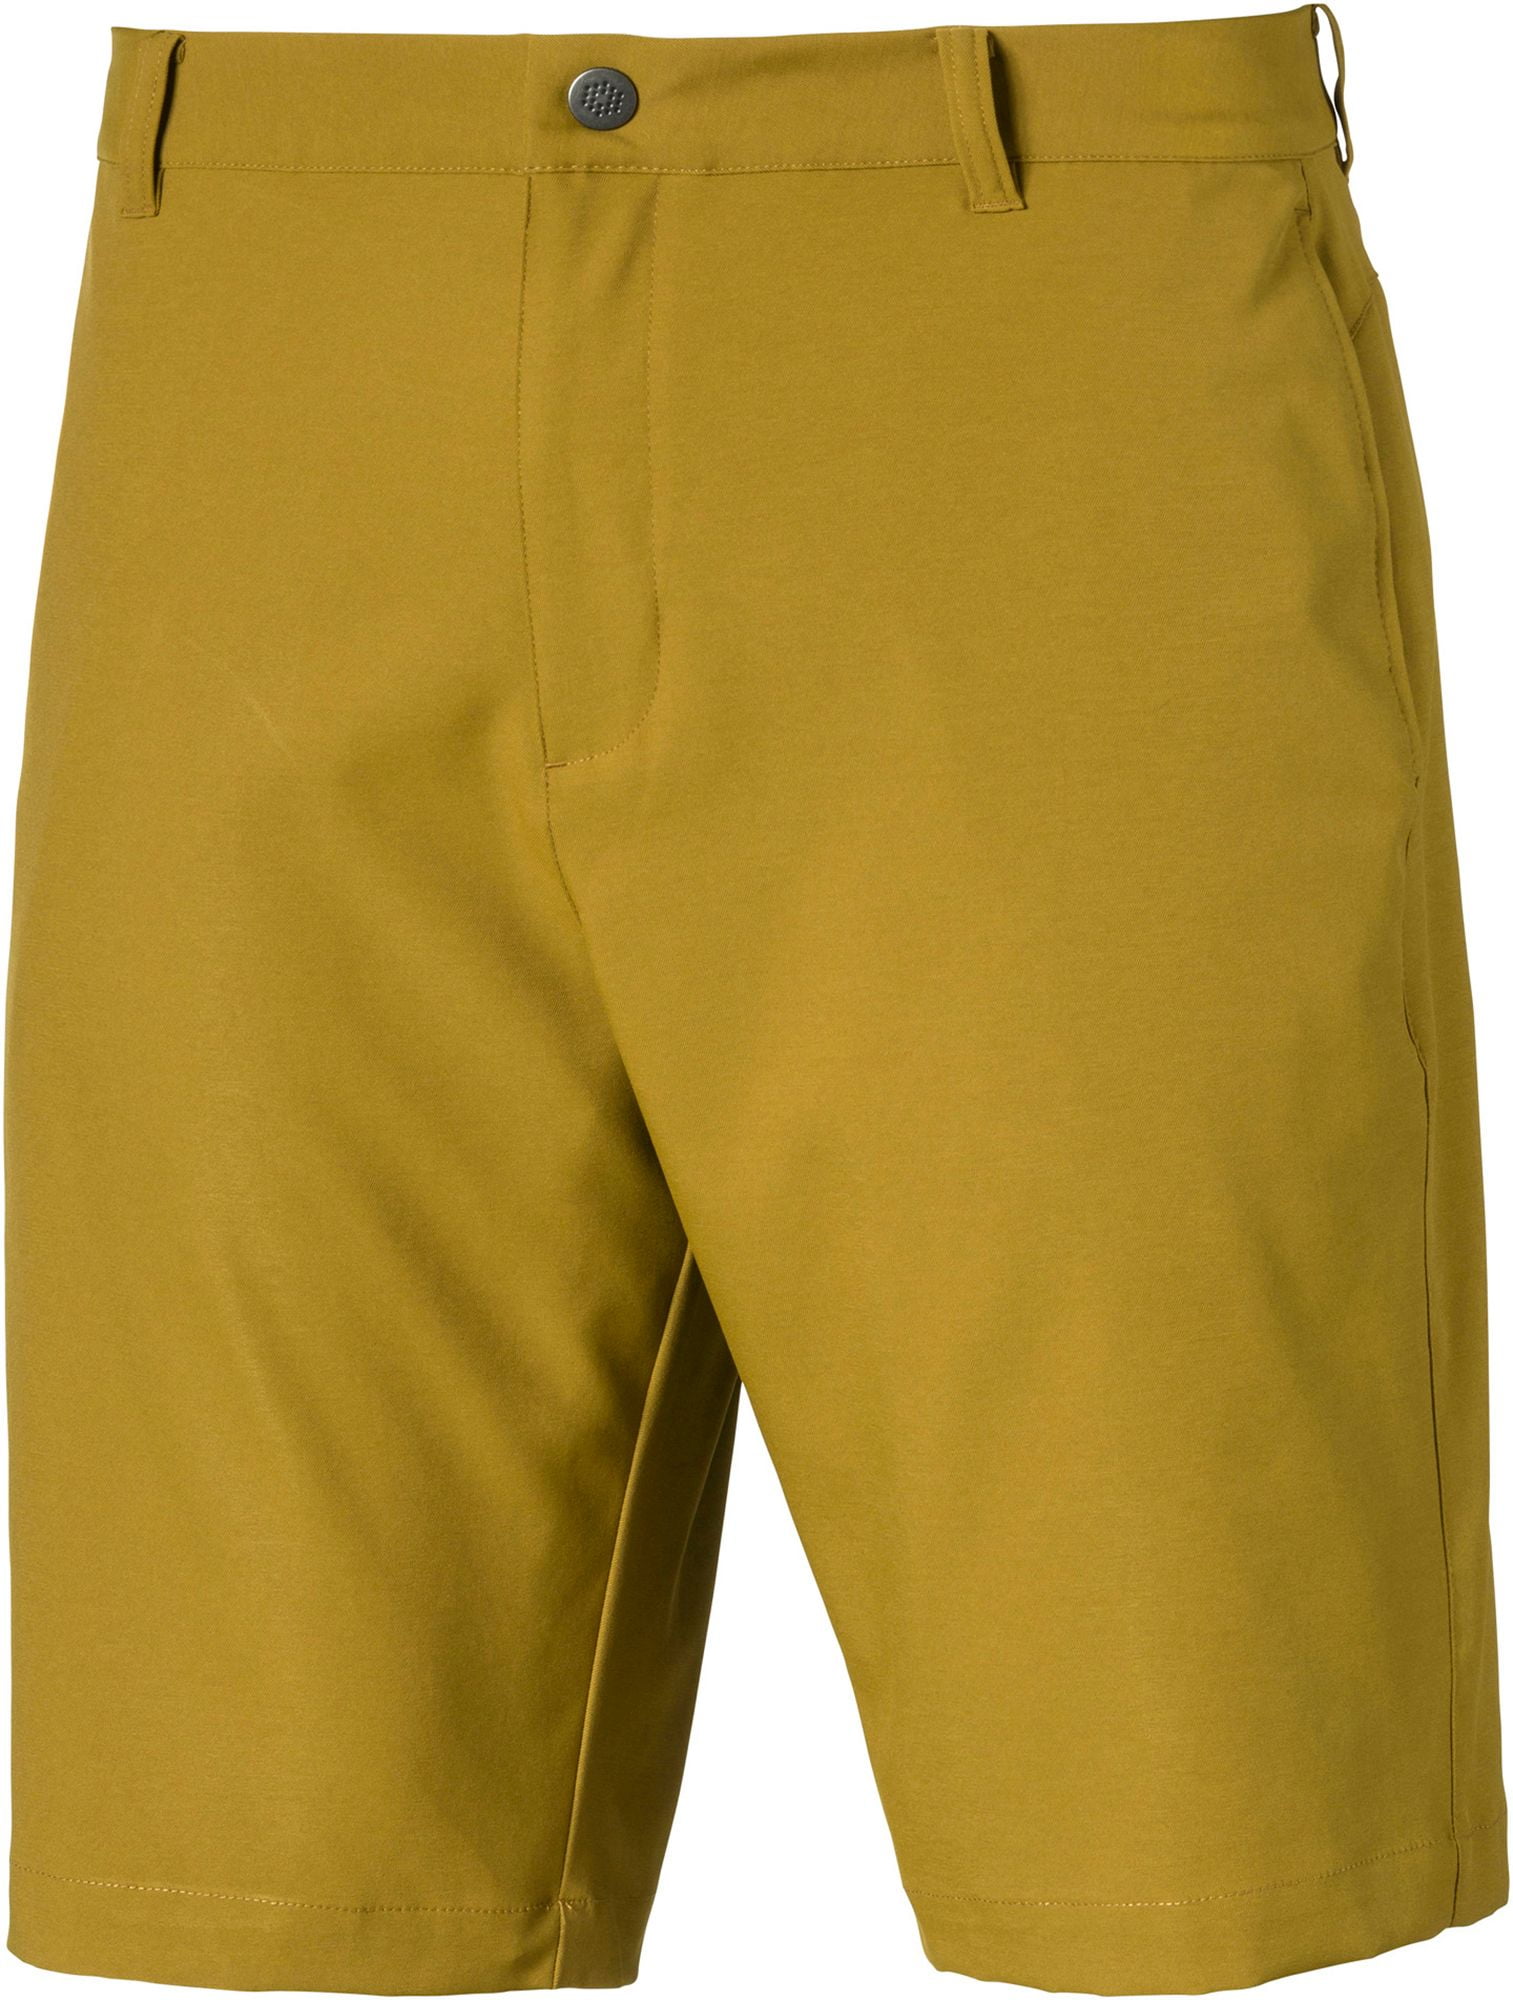 puma yellow golf shorts